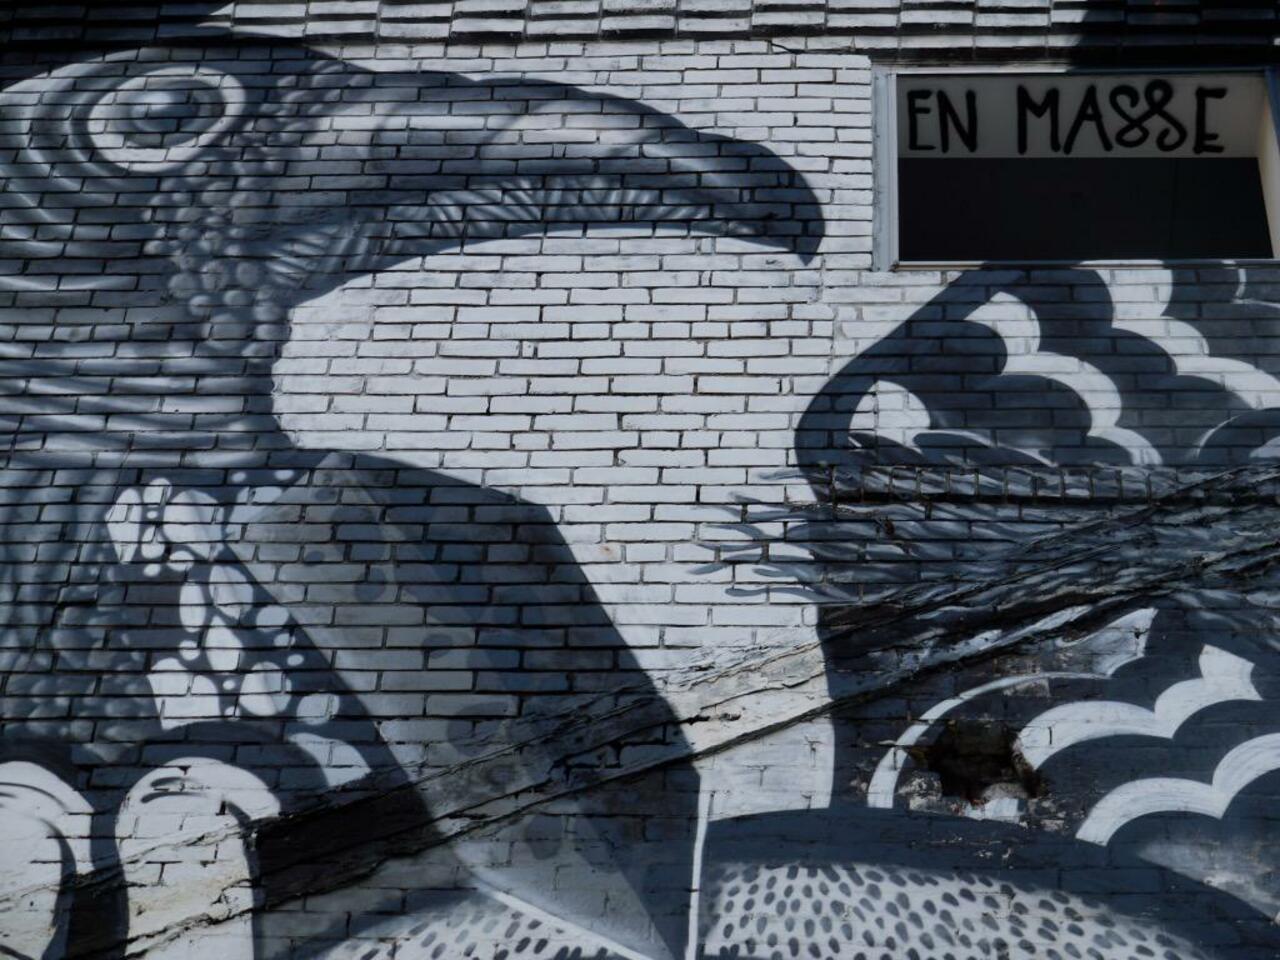 En Masse #streetart #mural #GraffitiEsArte #graffiti @StreetArtBuzz @OntarioGraff @NocturnalArmy #ArtWork http://t.co/8sh6UhEsMX